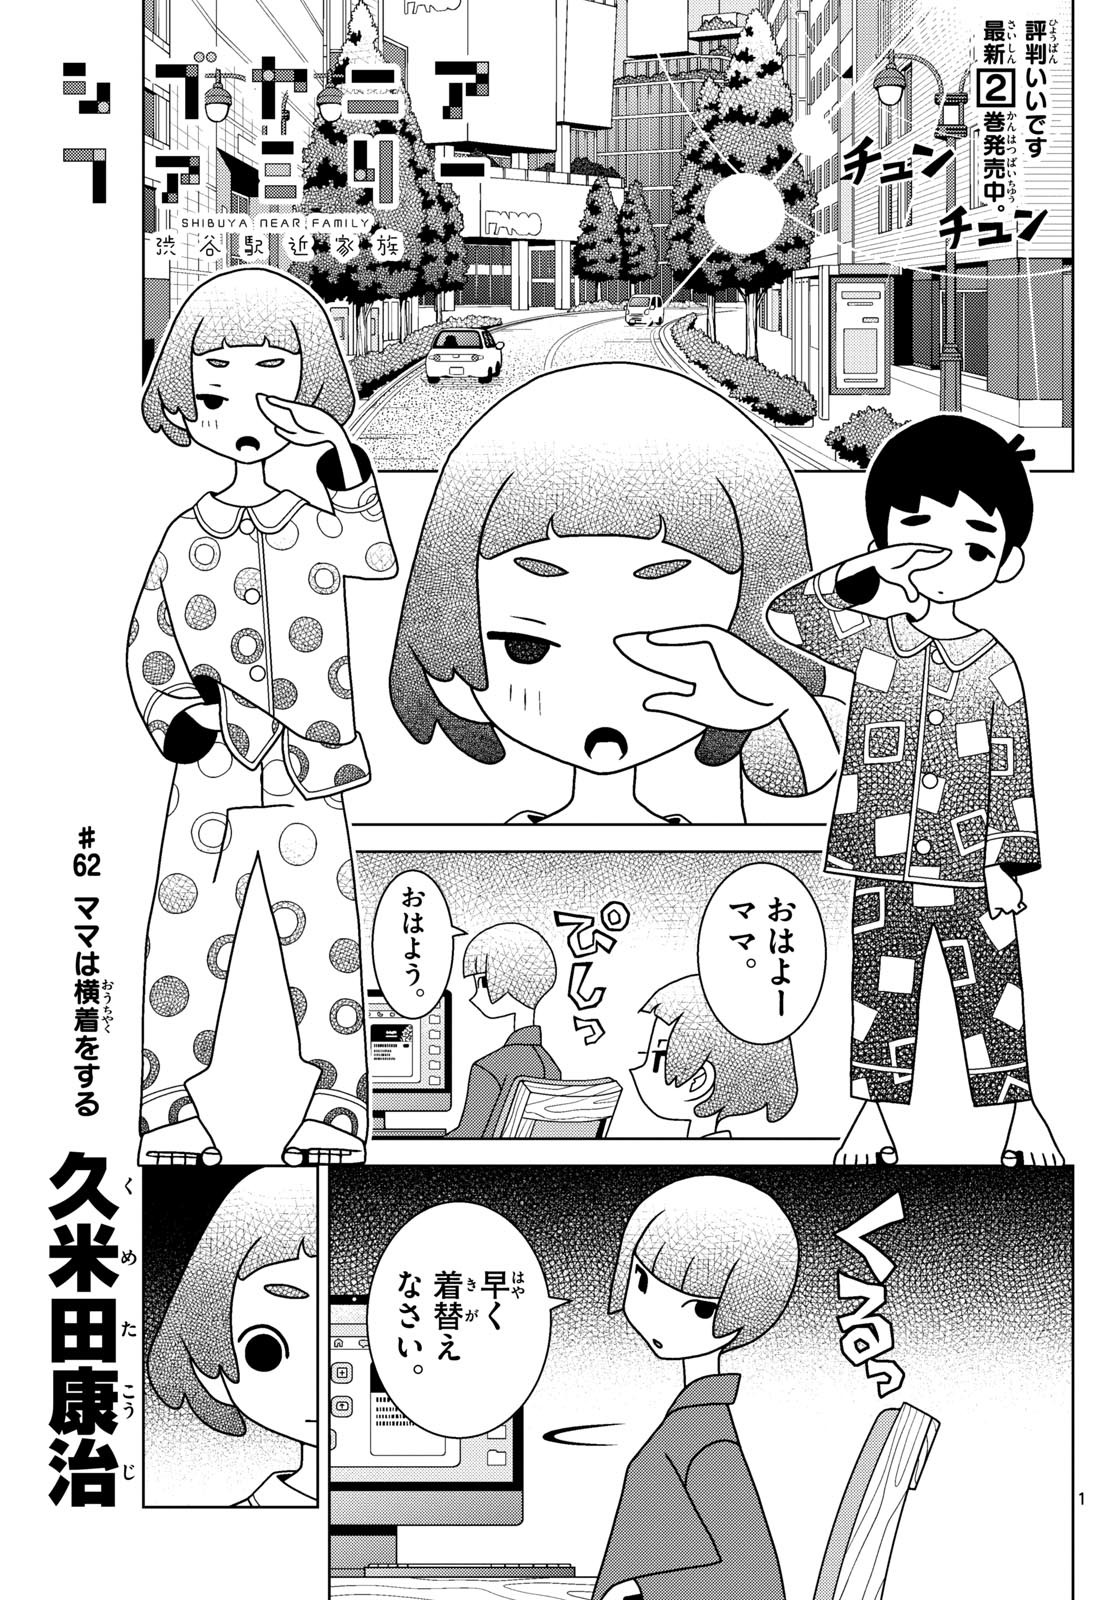 Shibuya Near Family - Chapter 062 - Page 1